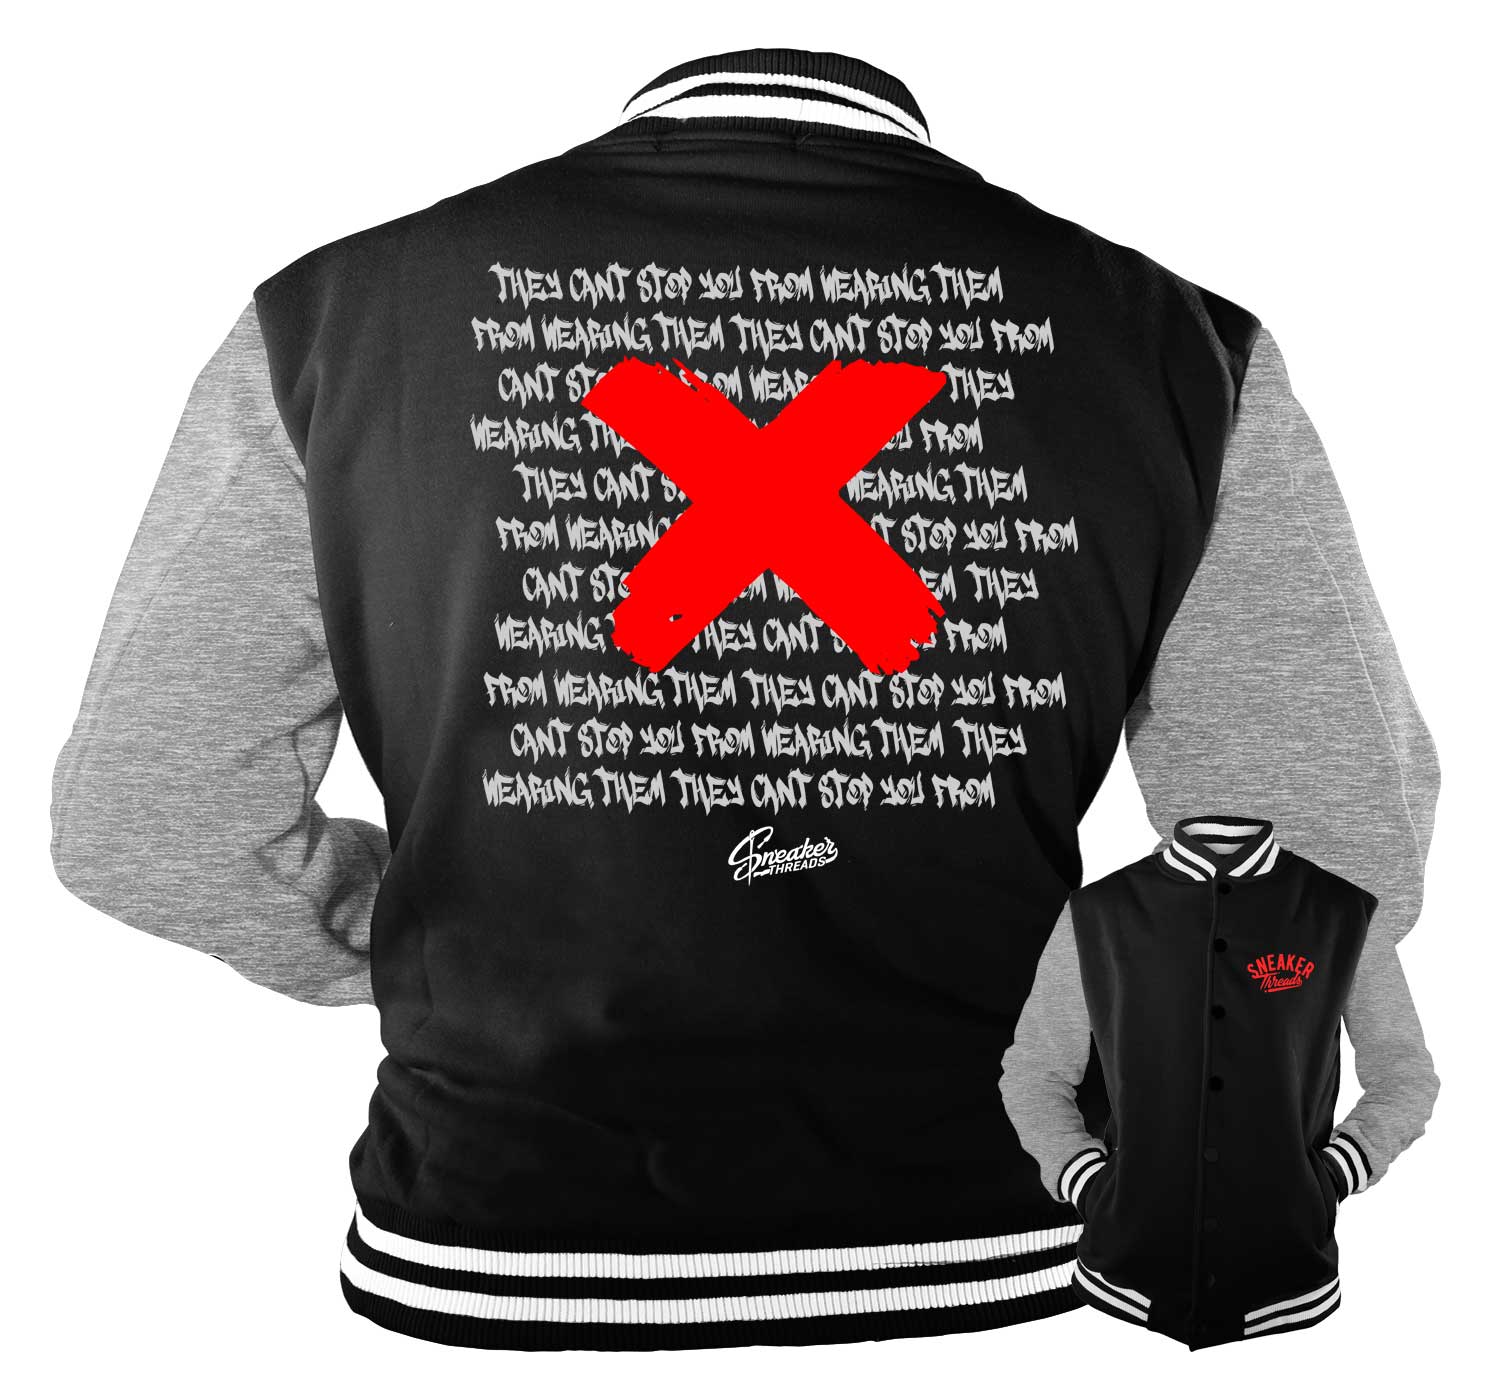 Retro 1 Rebellionaire Jacket - Banned - Black